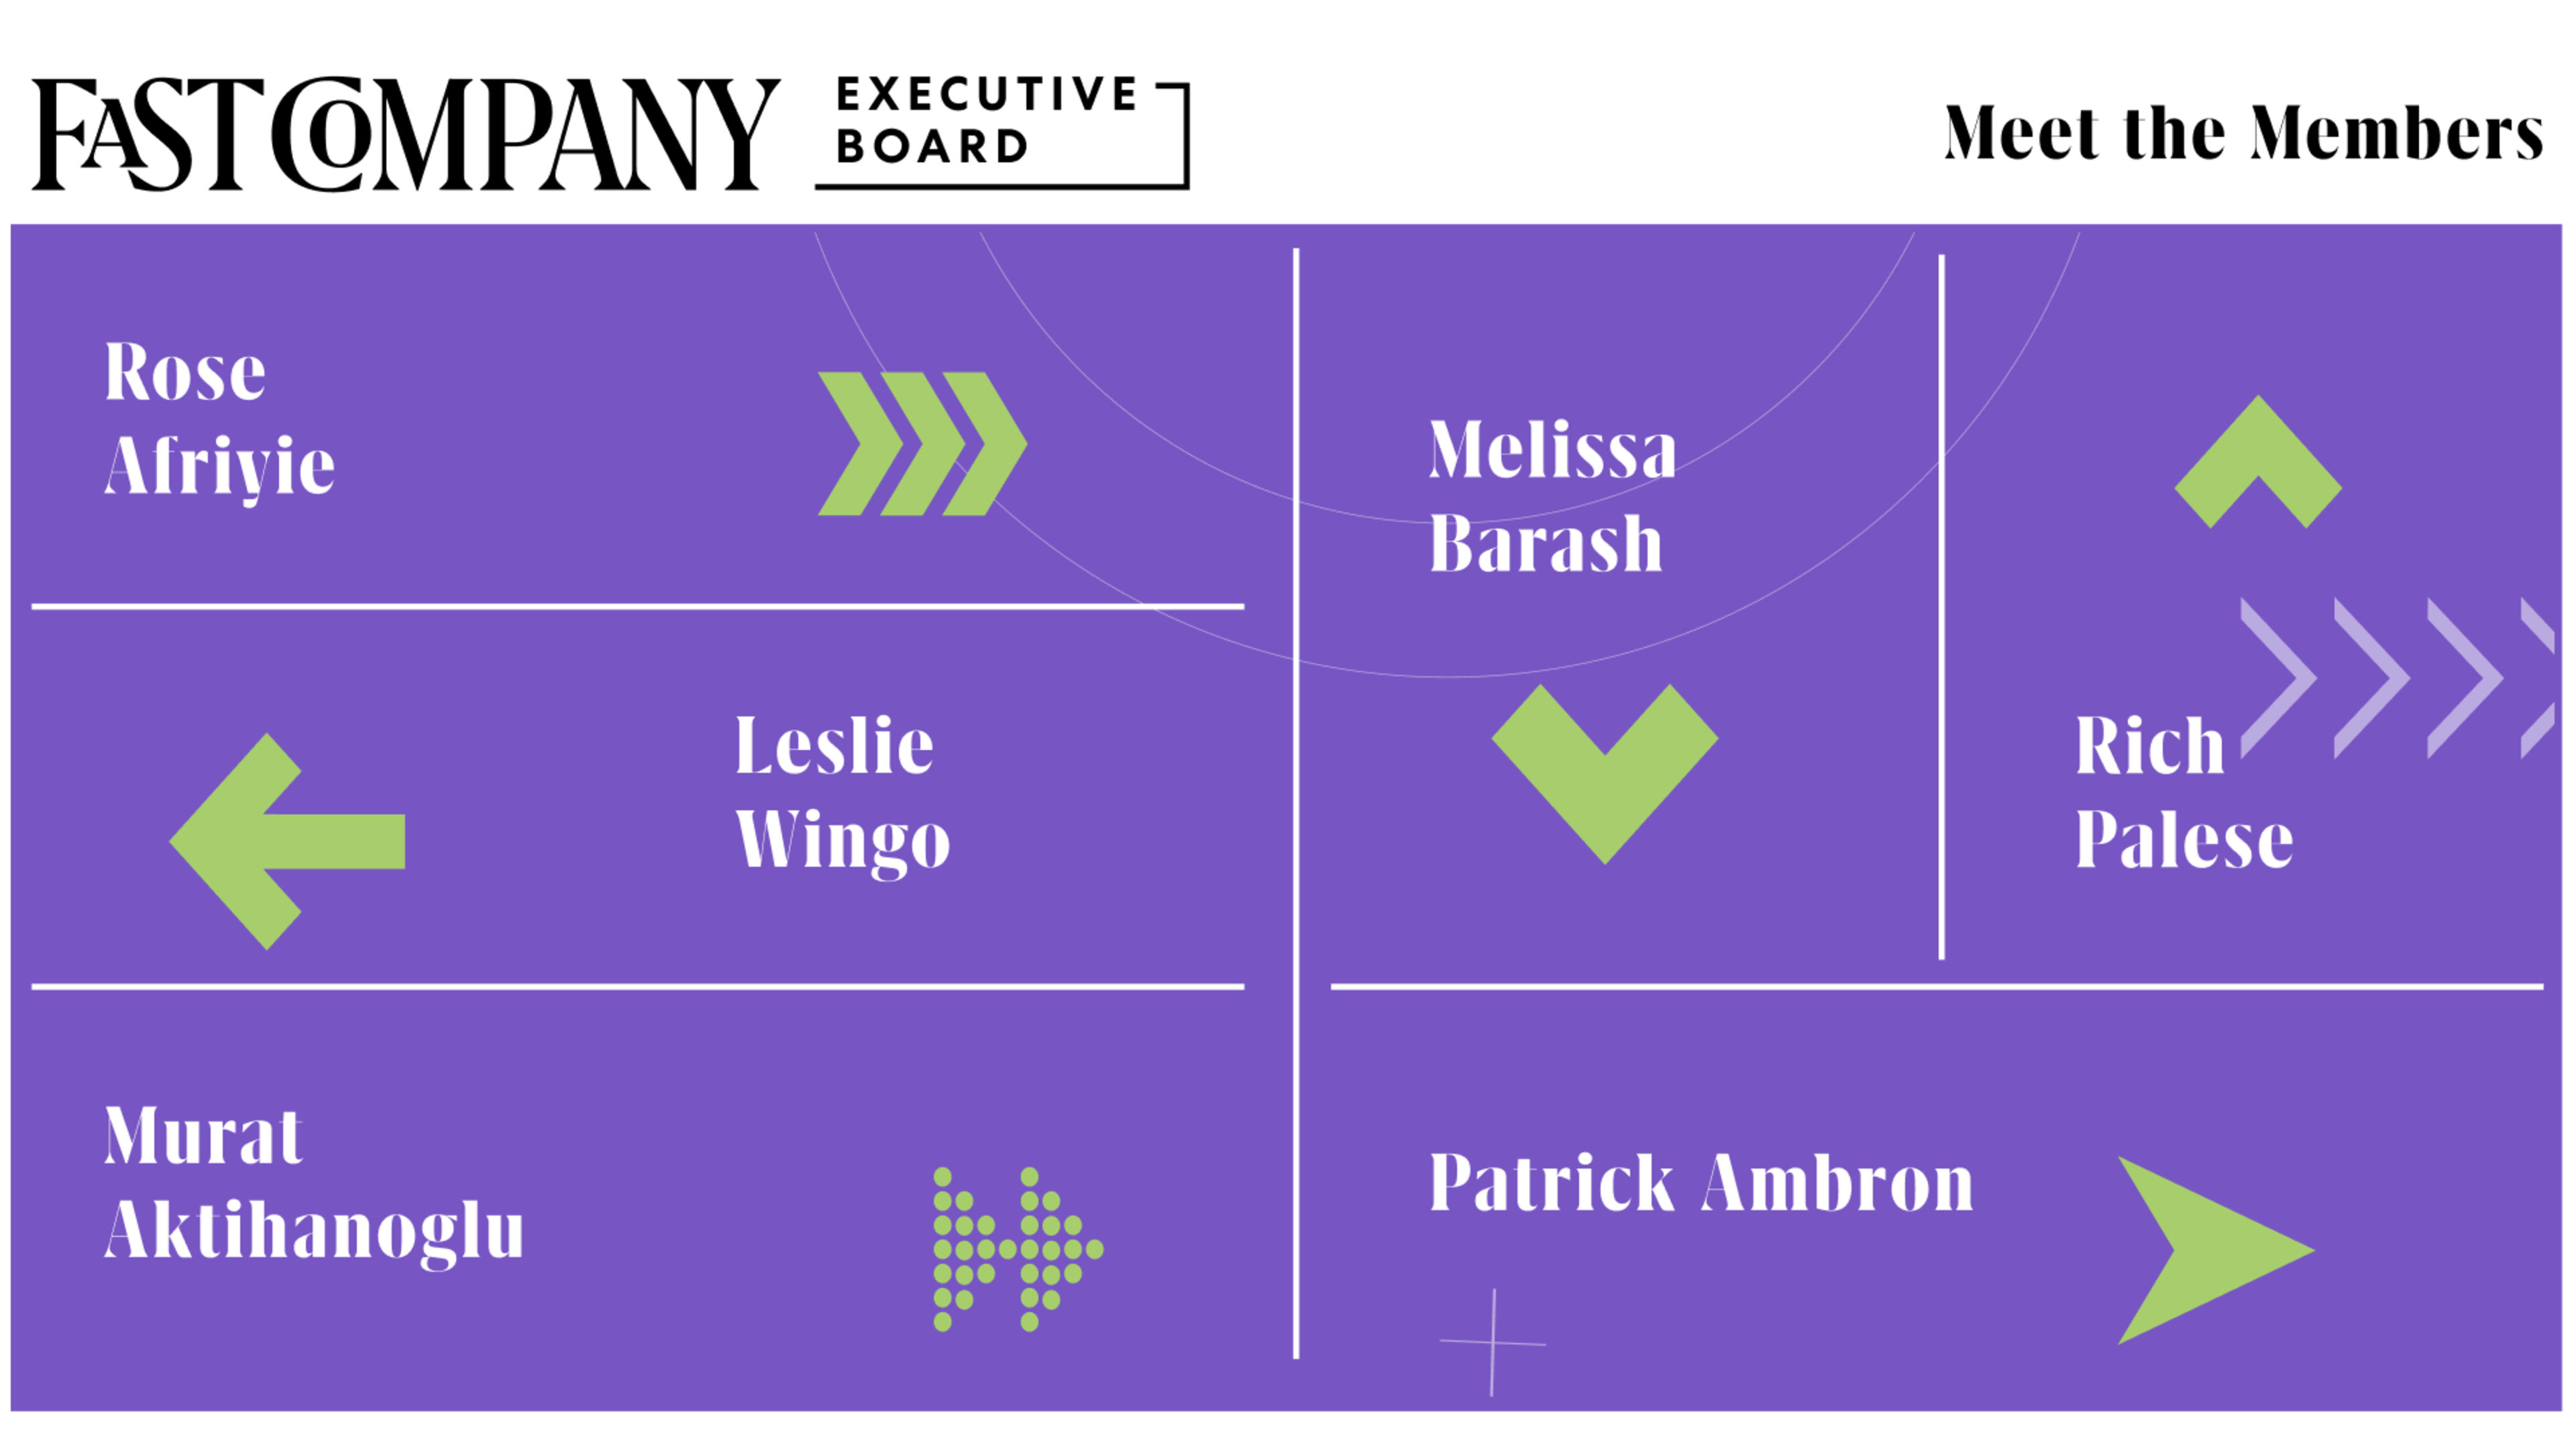 Meet six founding members of Fast Company Executive Board